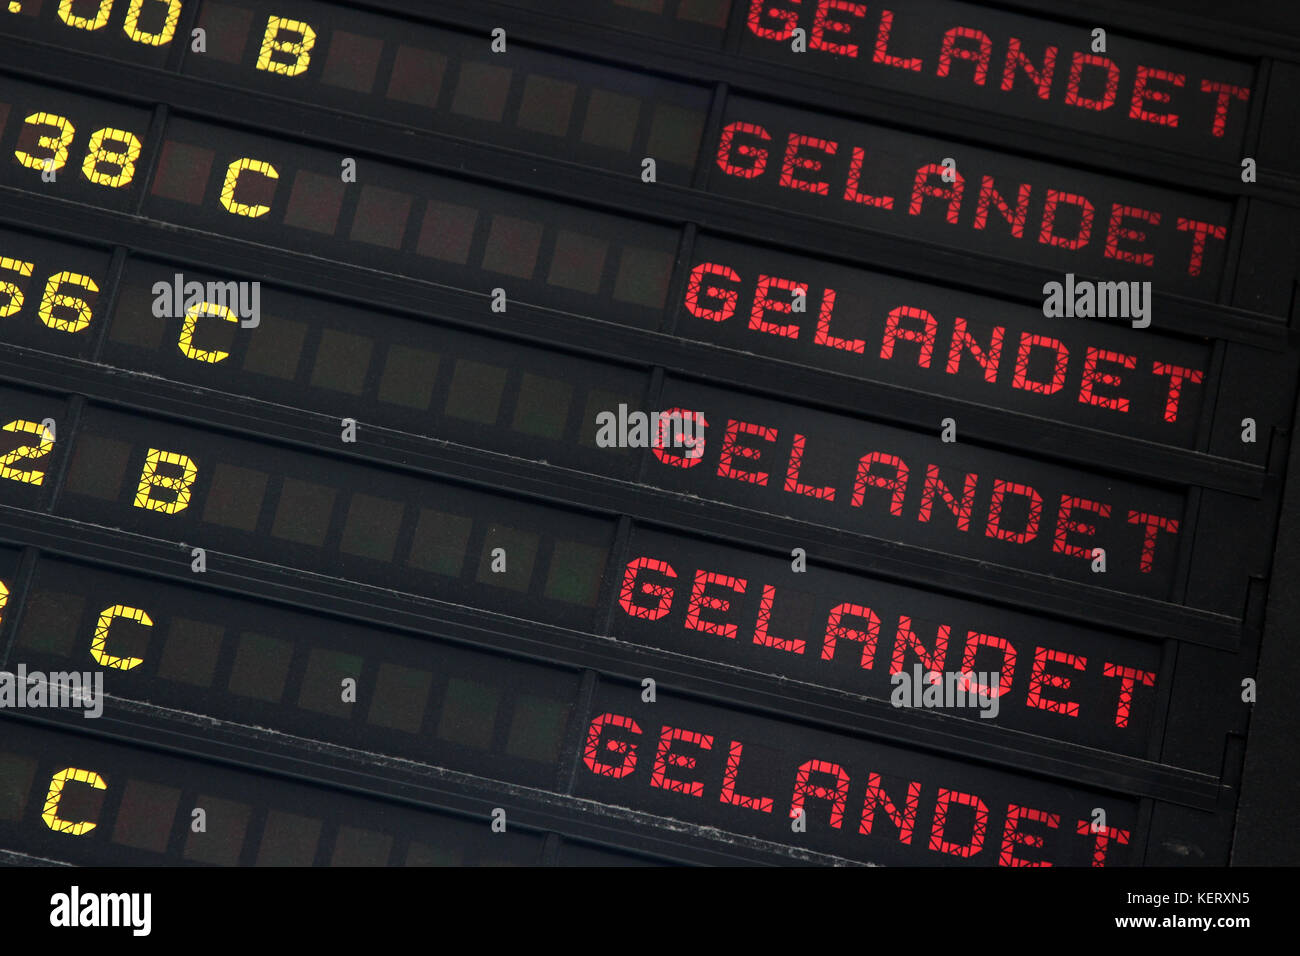 destination board German at airport Stock Photo